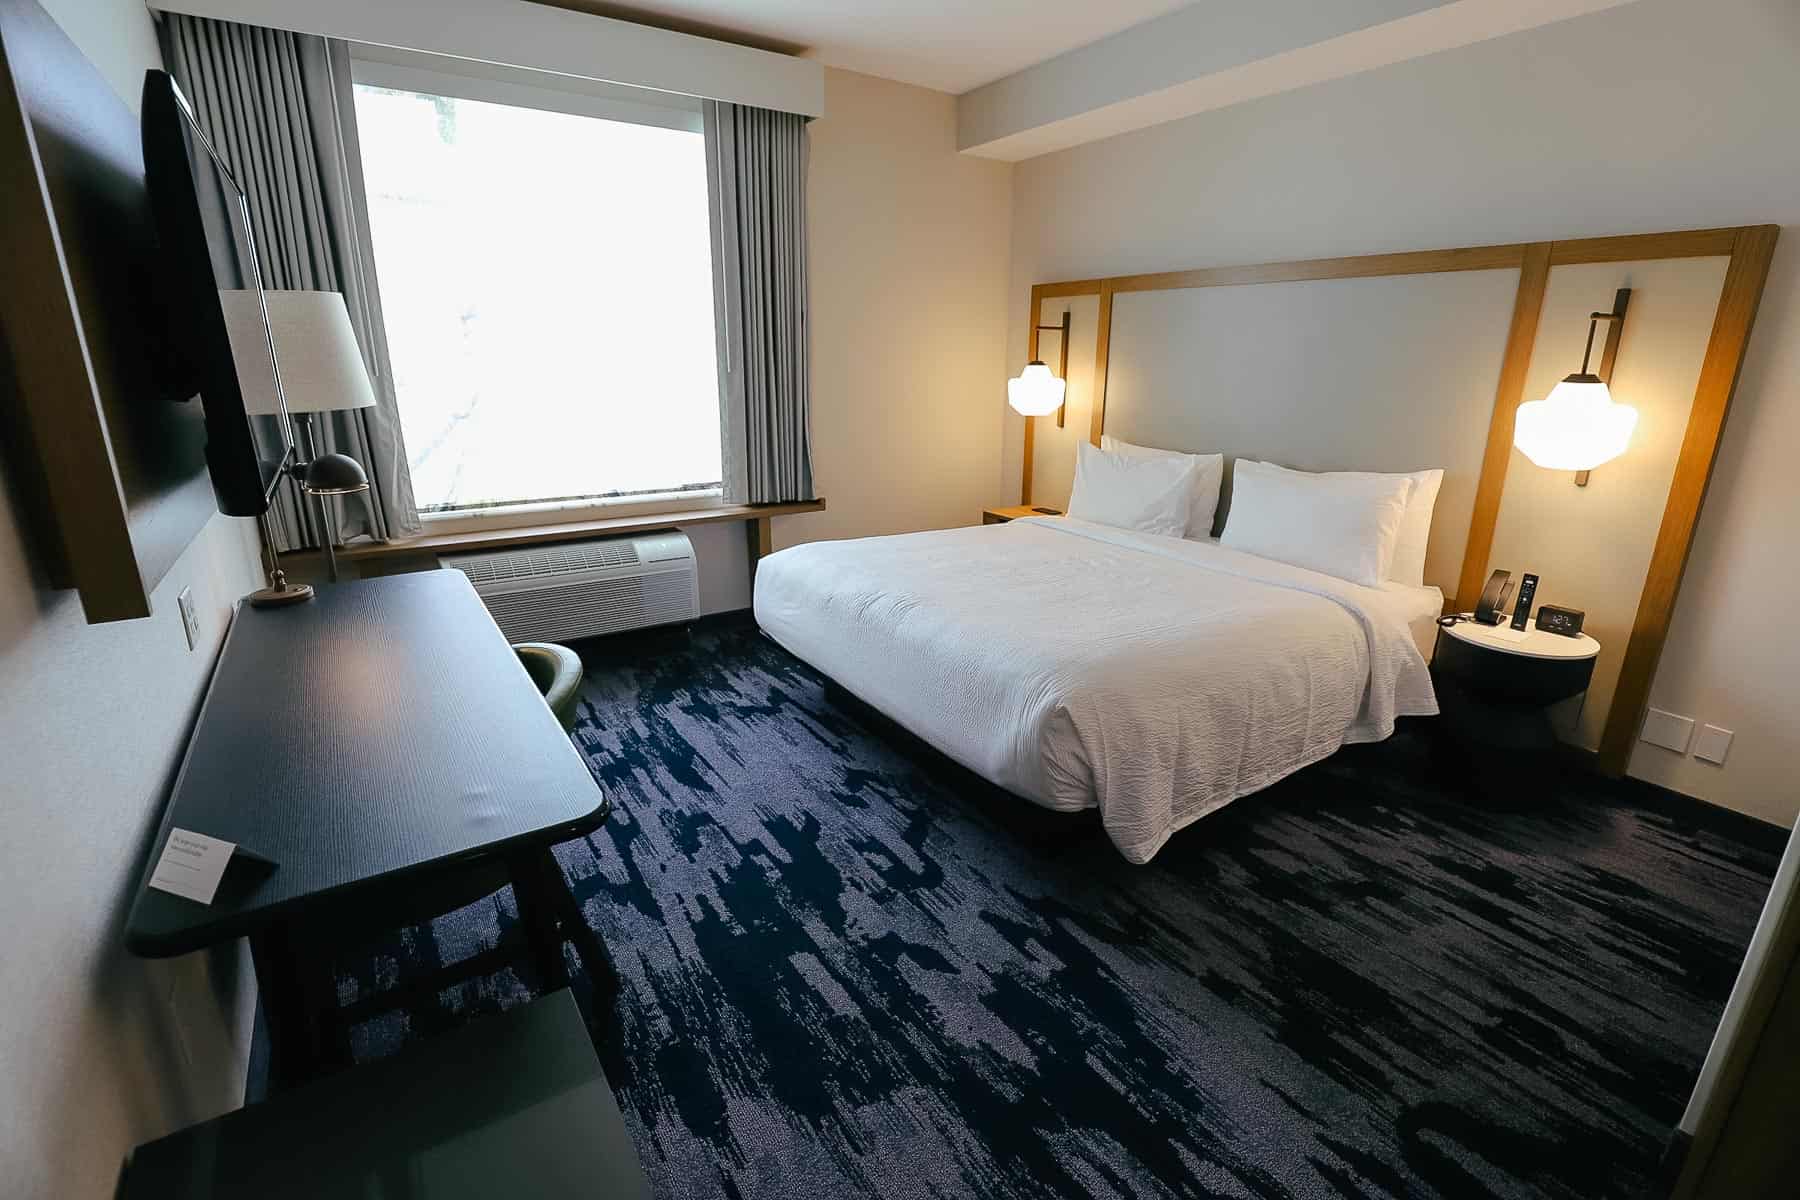 Hotel room near Disney World. 